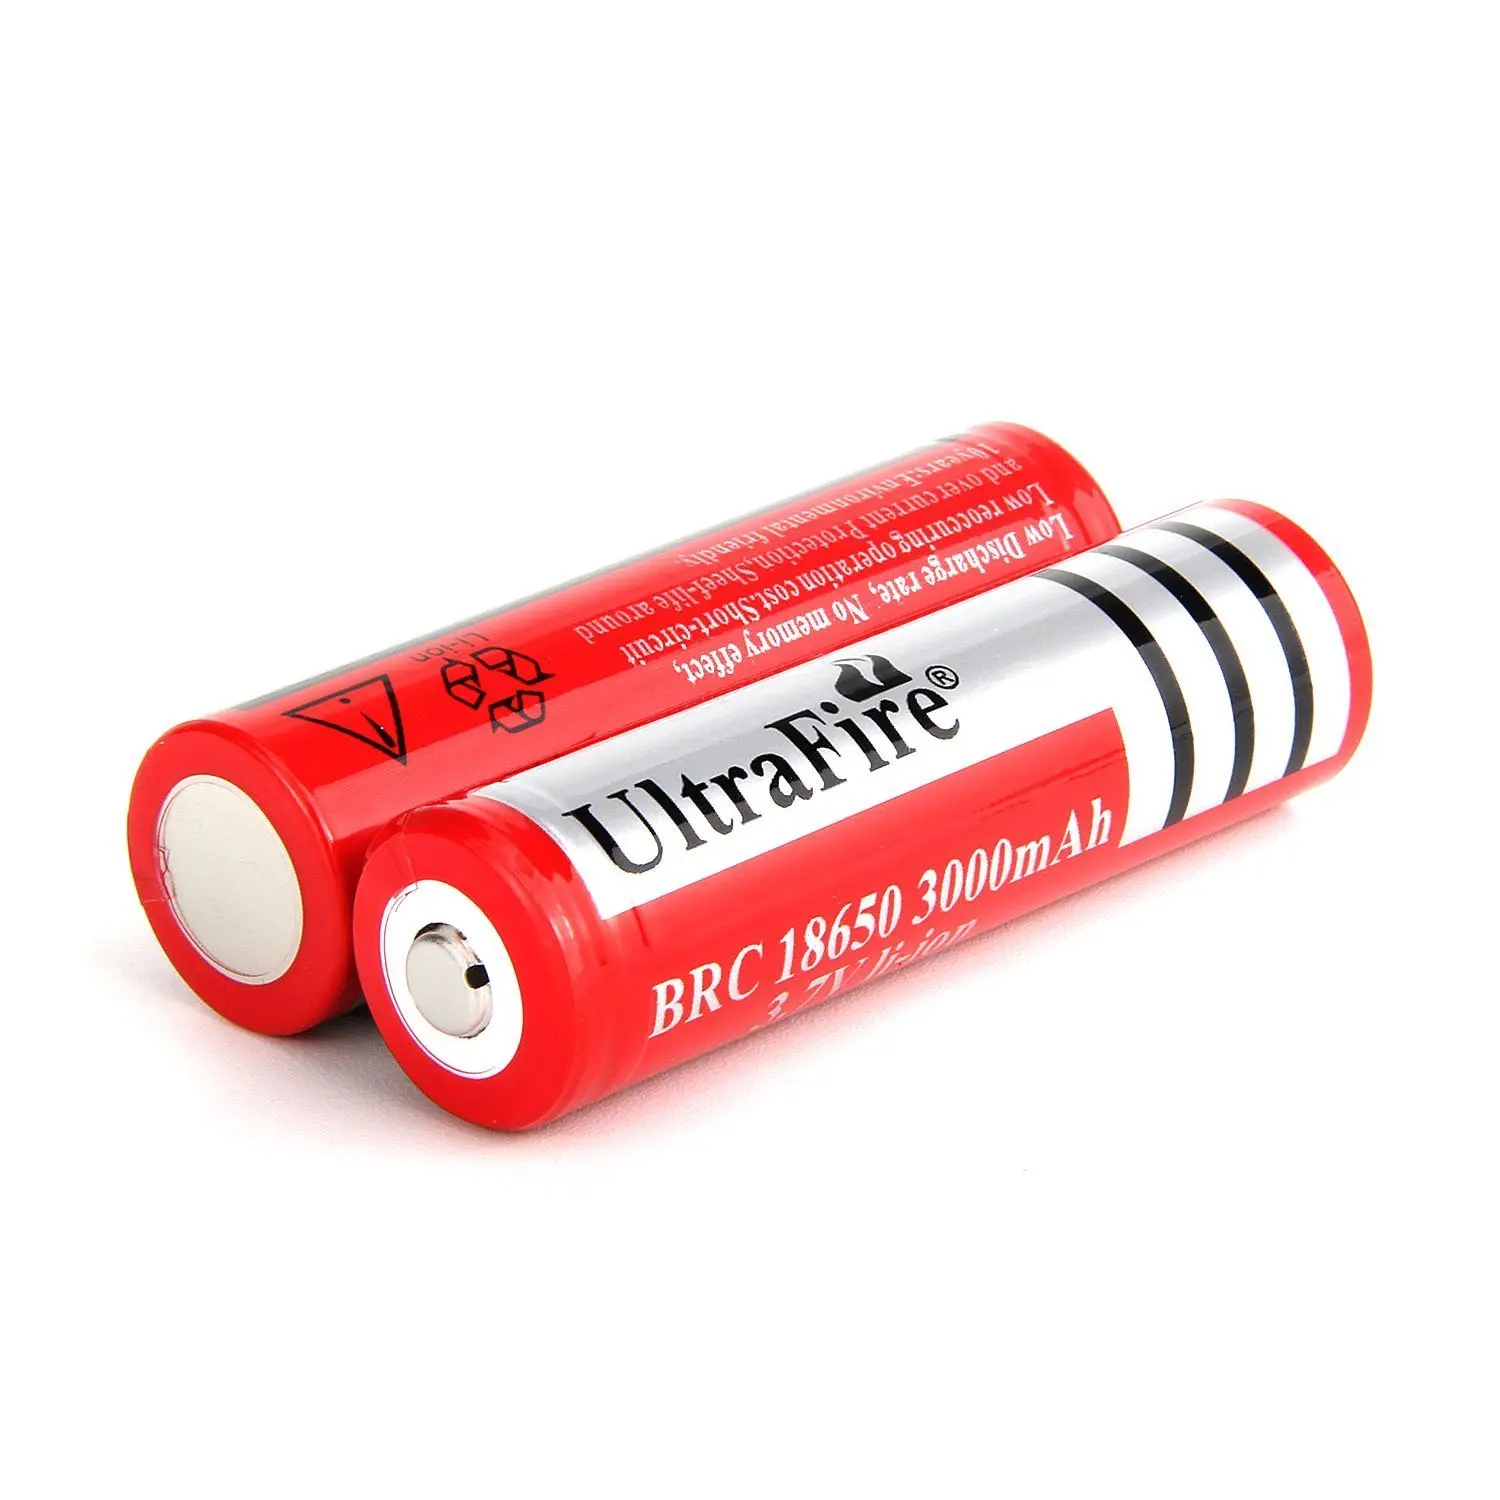 Find battery. Аккумулятор ULTRAFIRE 18650. Батарейки аккумуляторные ULTRAFIRE 18650. Батарейка 18650 Ultra Fire. Аккумулятор 18650 ULTRAFIRE 6800.